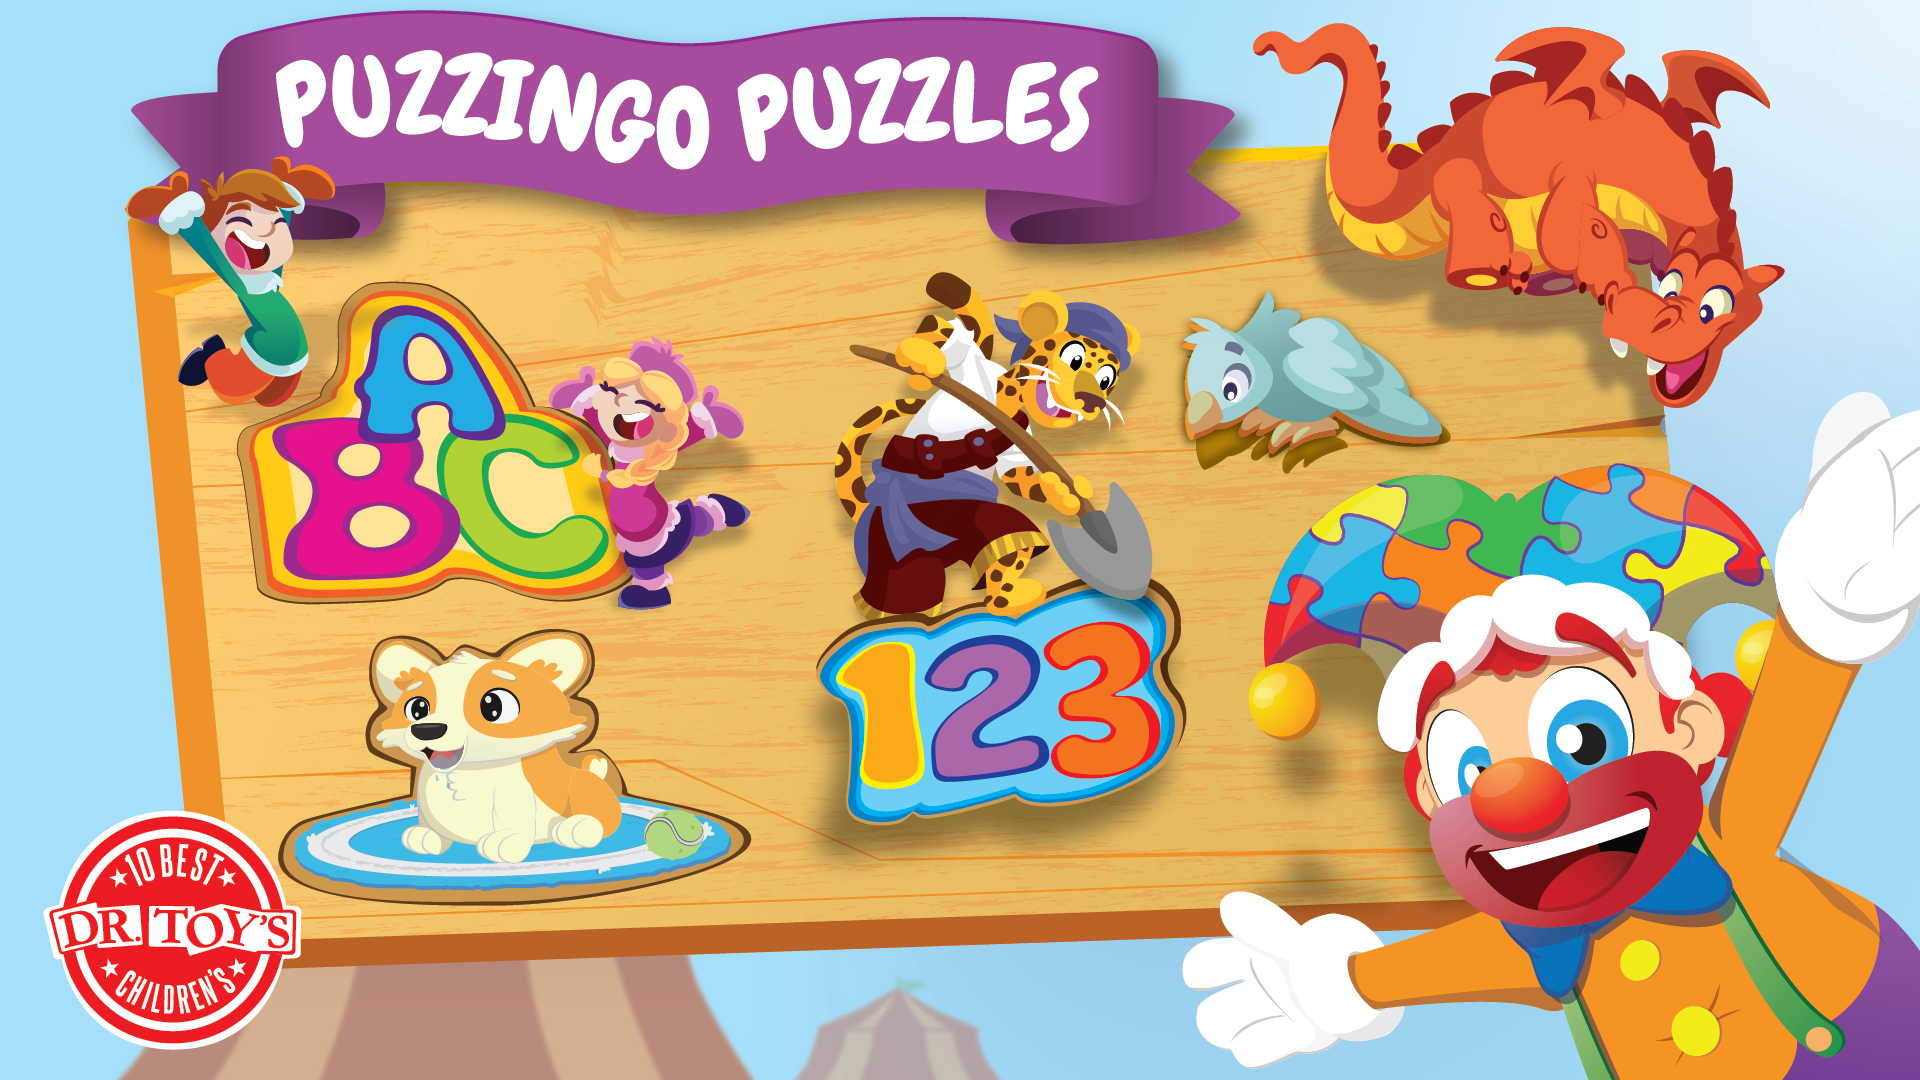 Puzzingo Puzzles App #Puzzingo #Puzzles #app #technology #ad